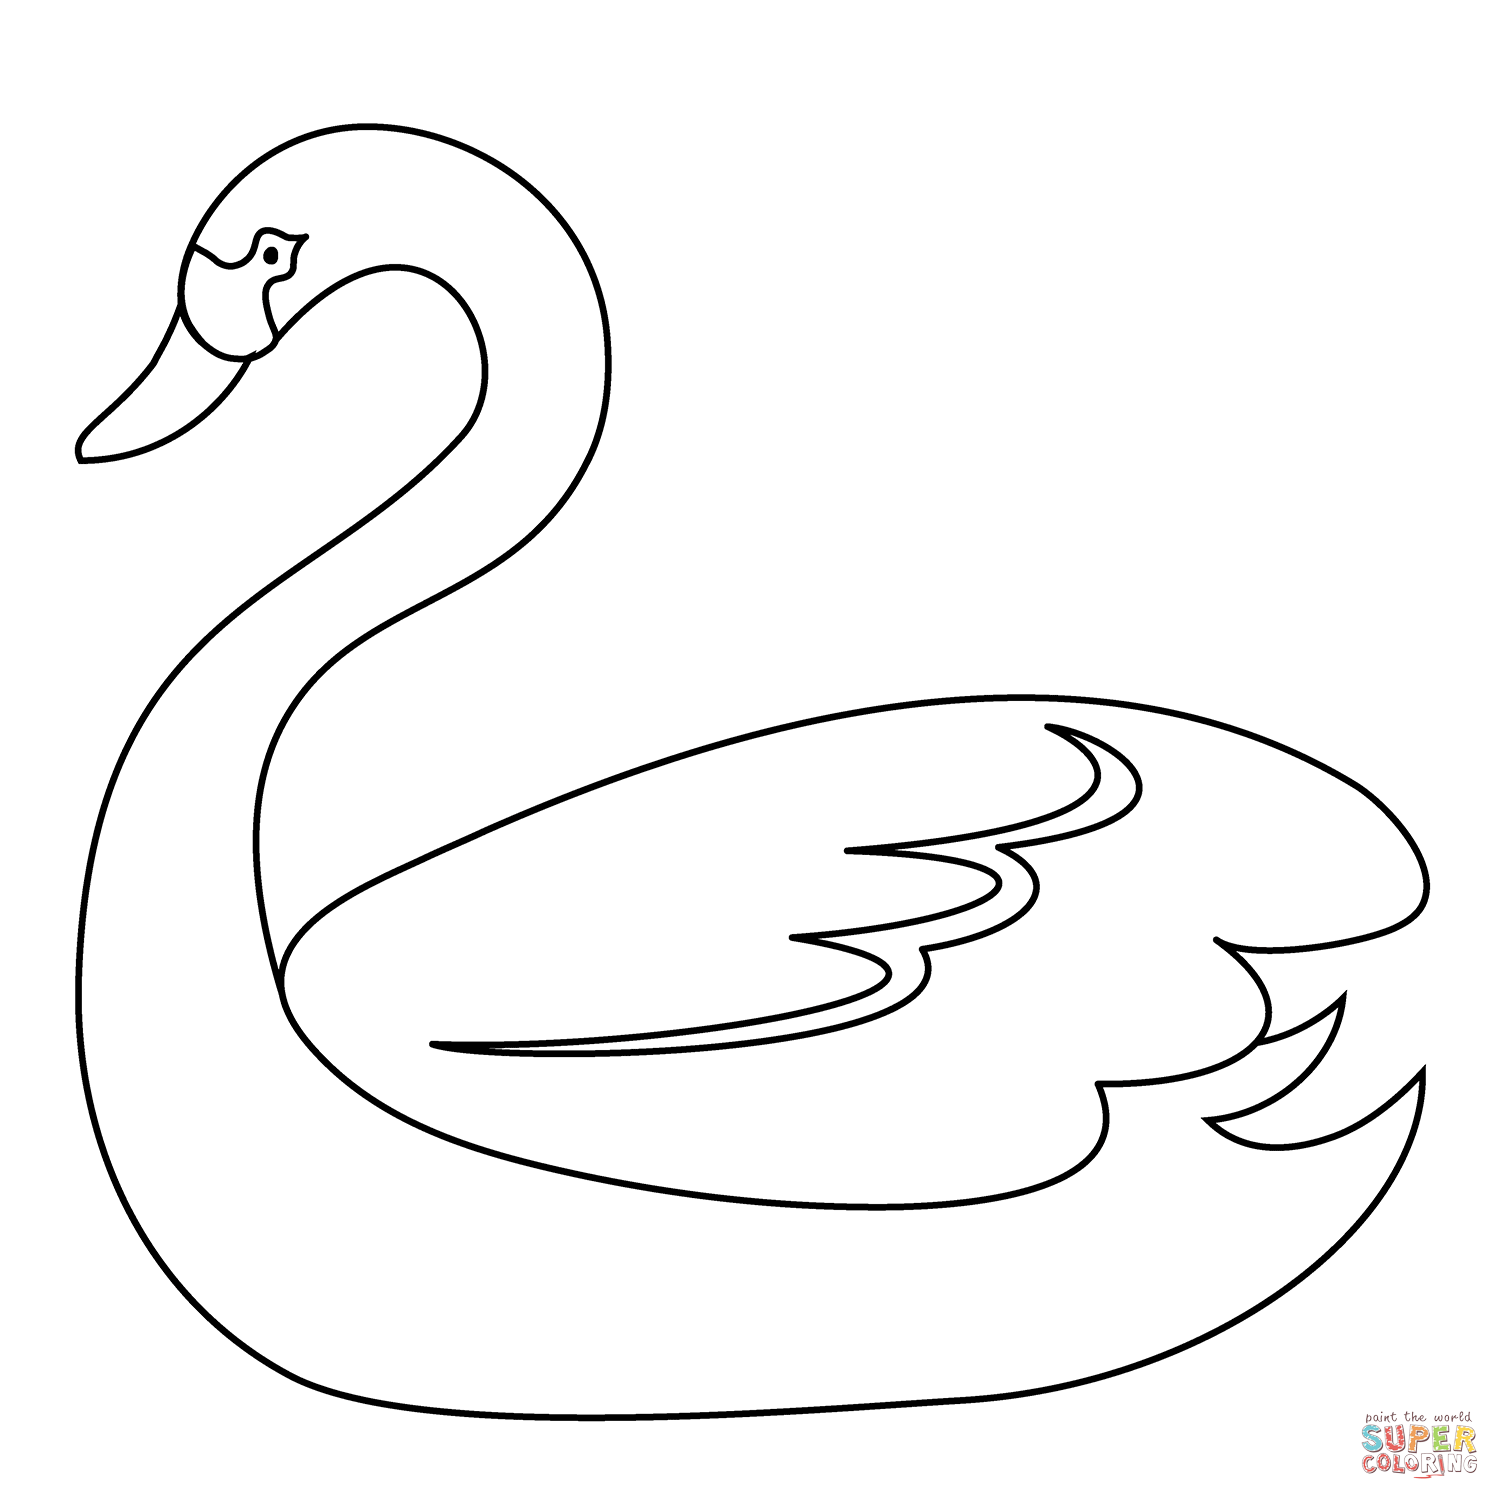 Swan emoji coloring page free printable coloring pages